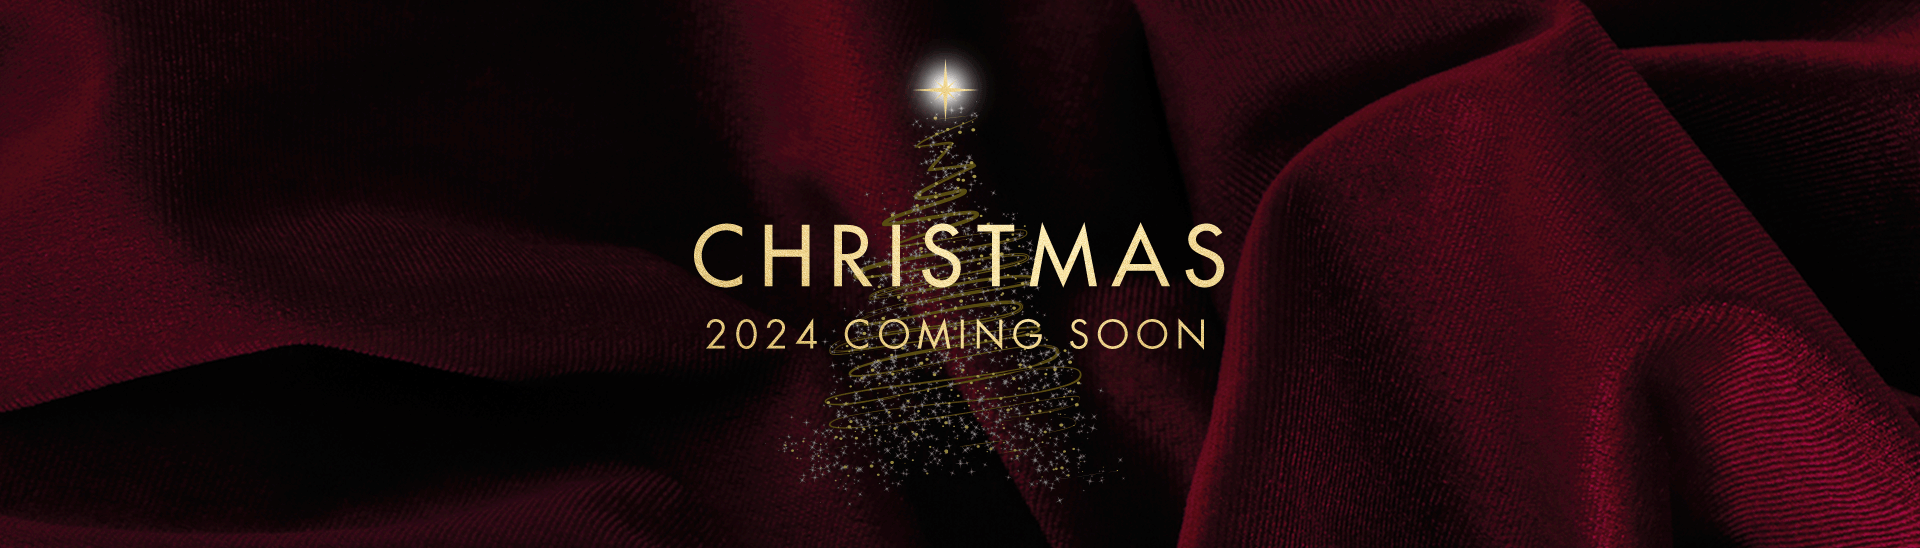 Christmas 2024 at Stockport